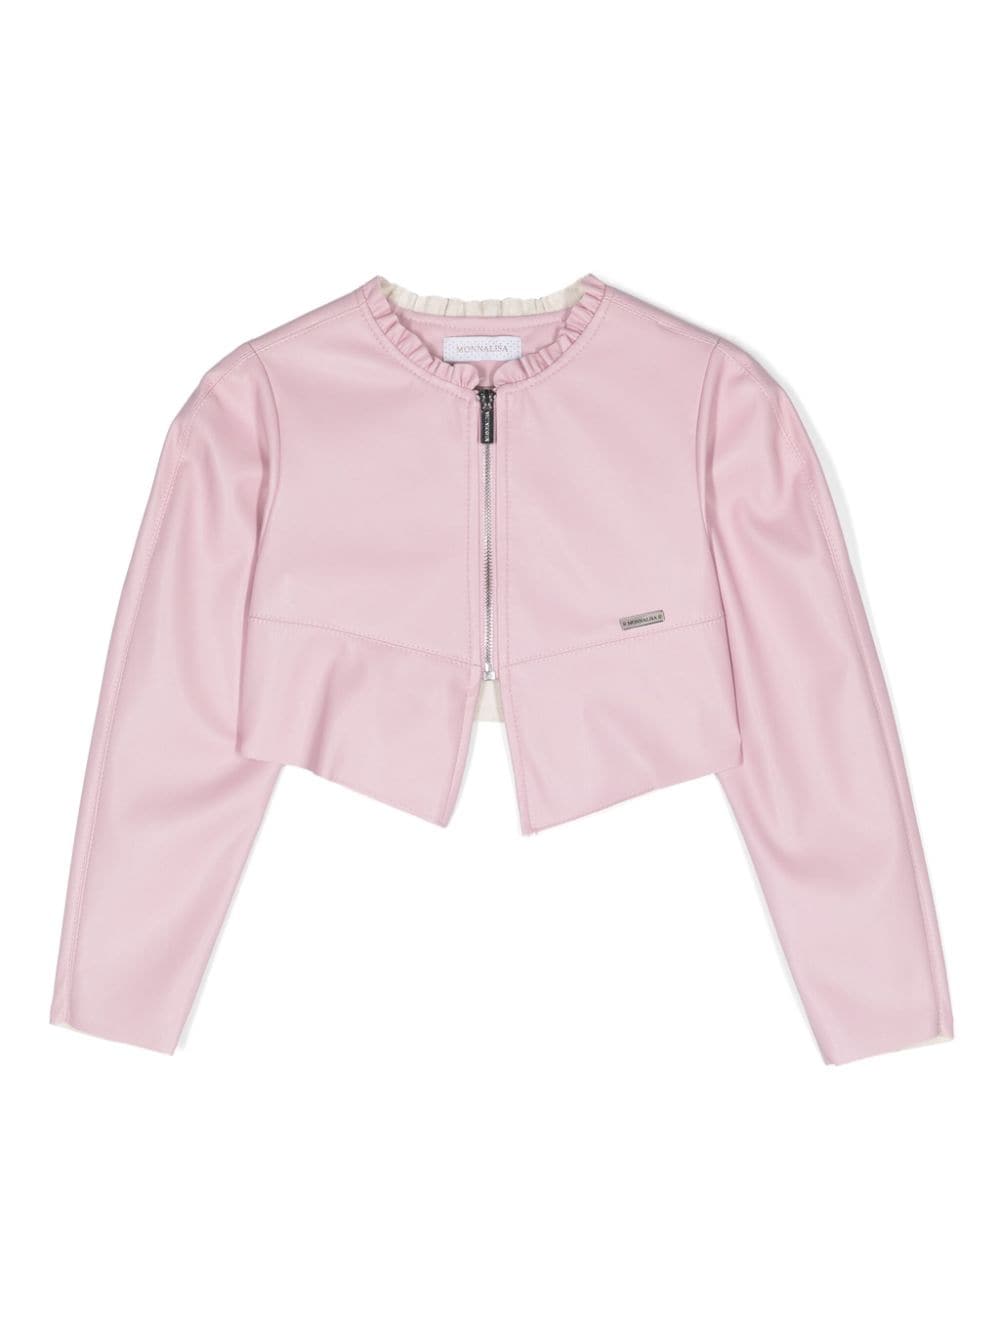 Monnalisa logo-plaque faux-leather jacket - Pink